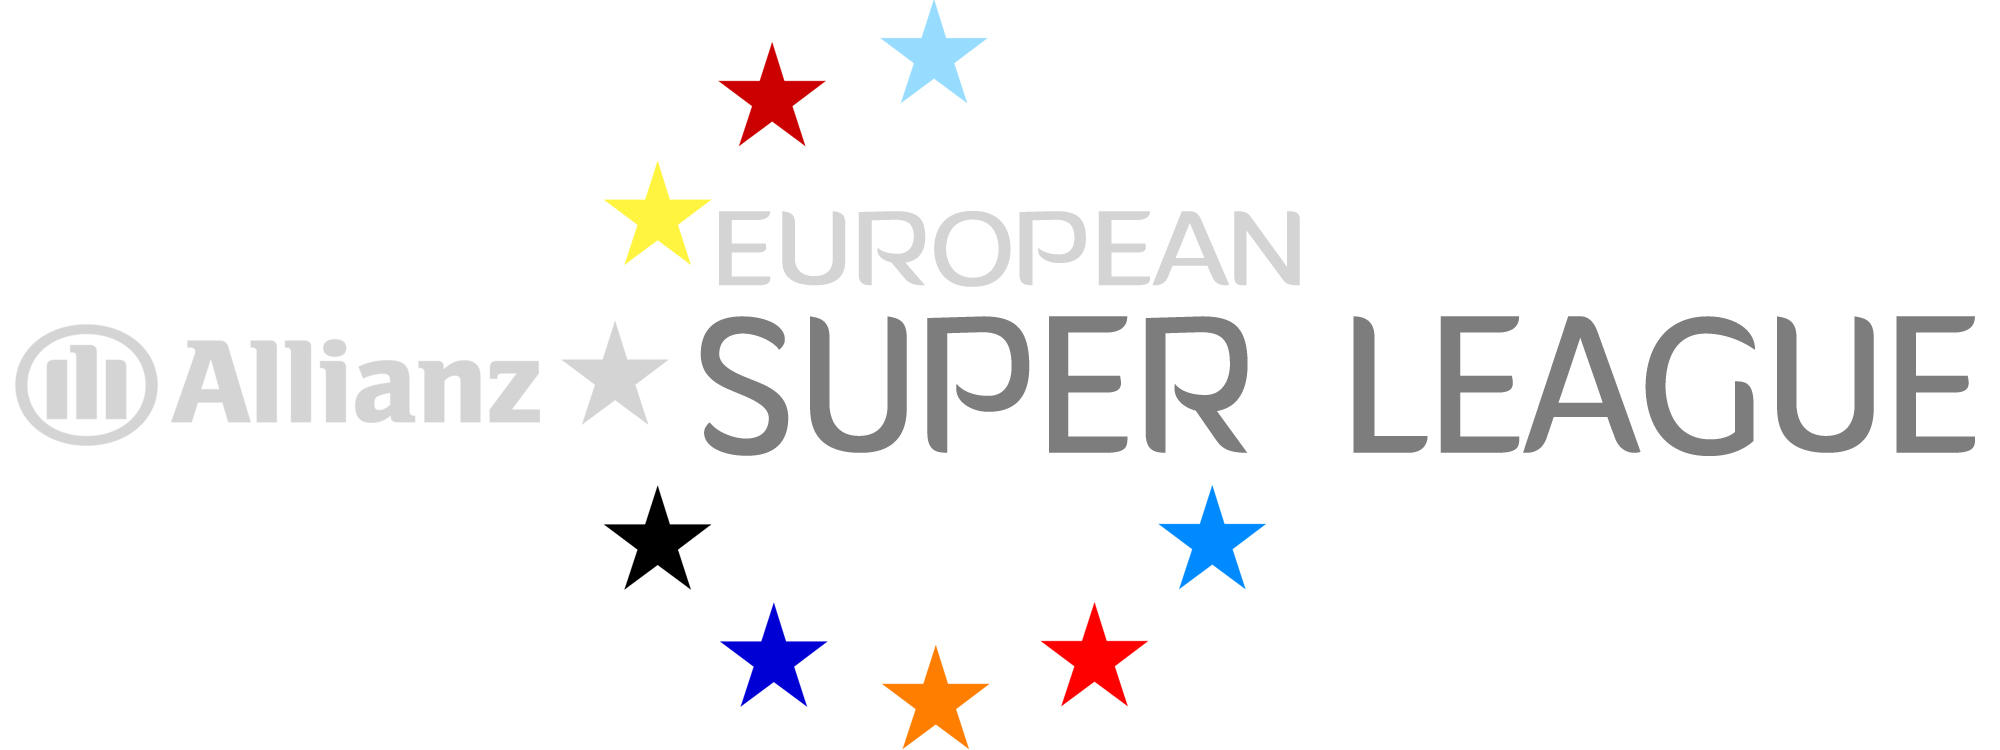 Super league europe